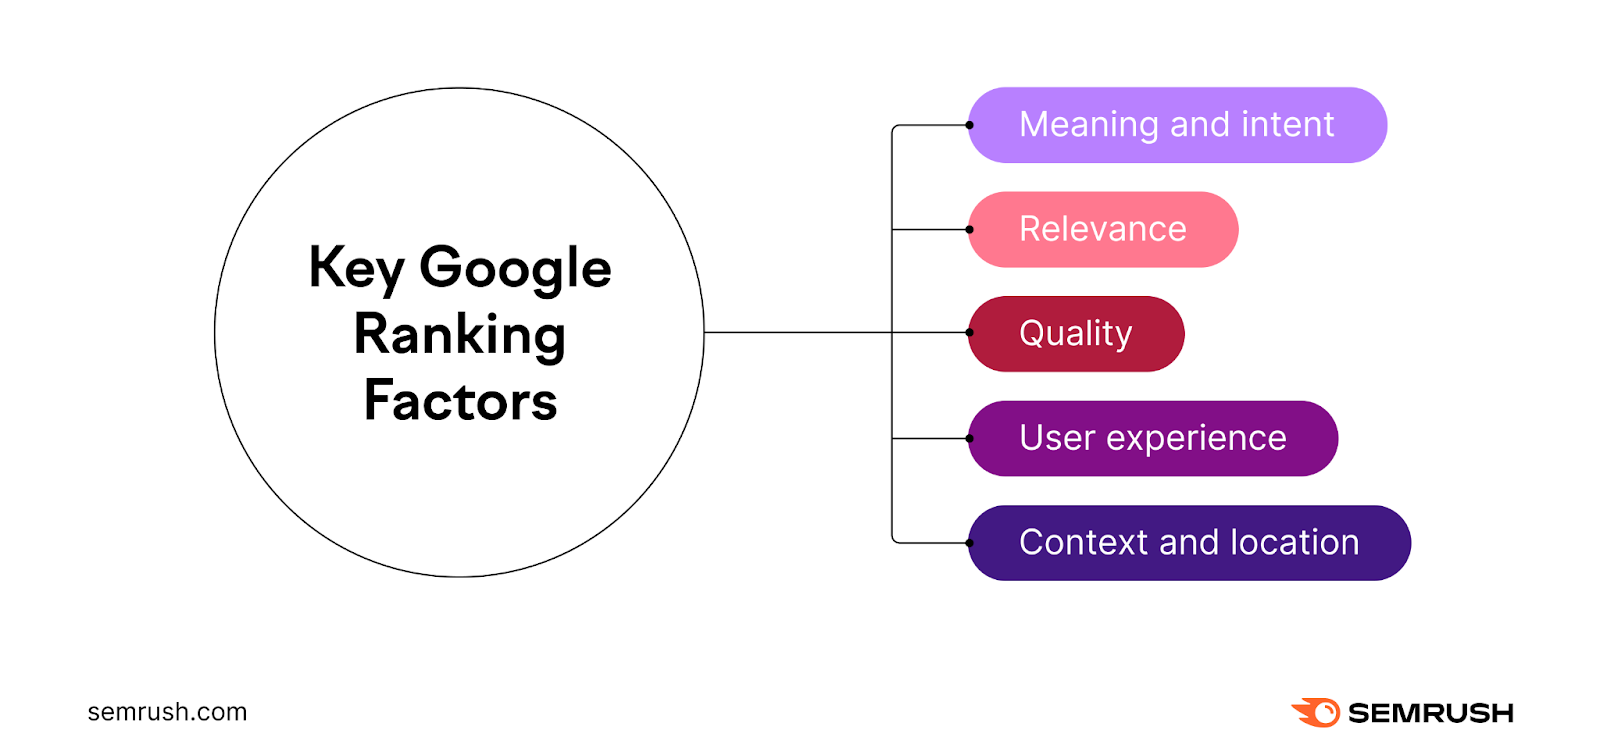 An infographic listing key Google ranking factors